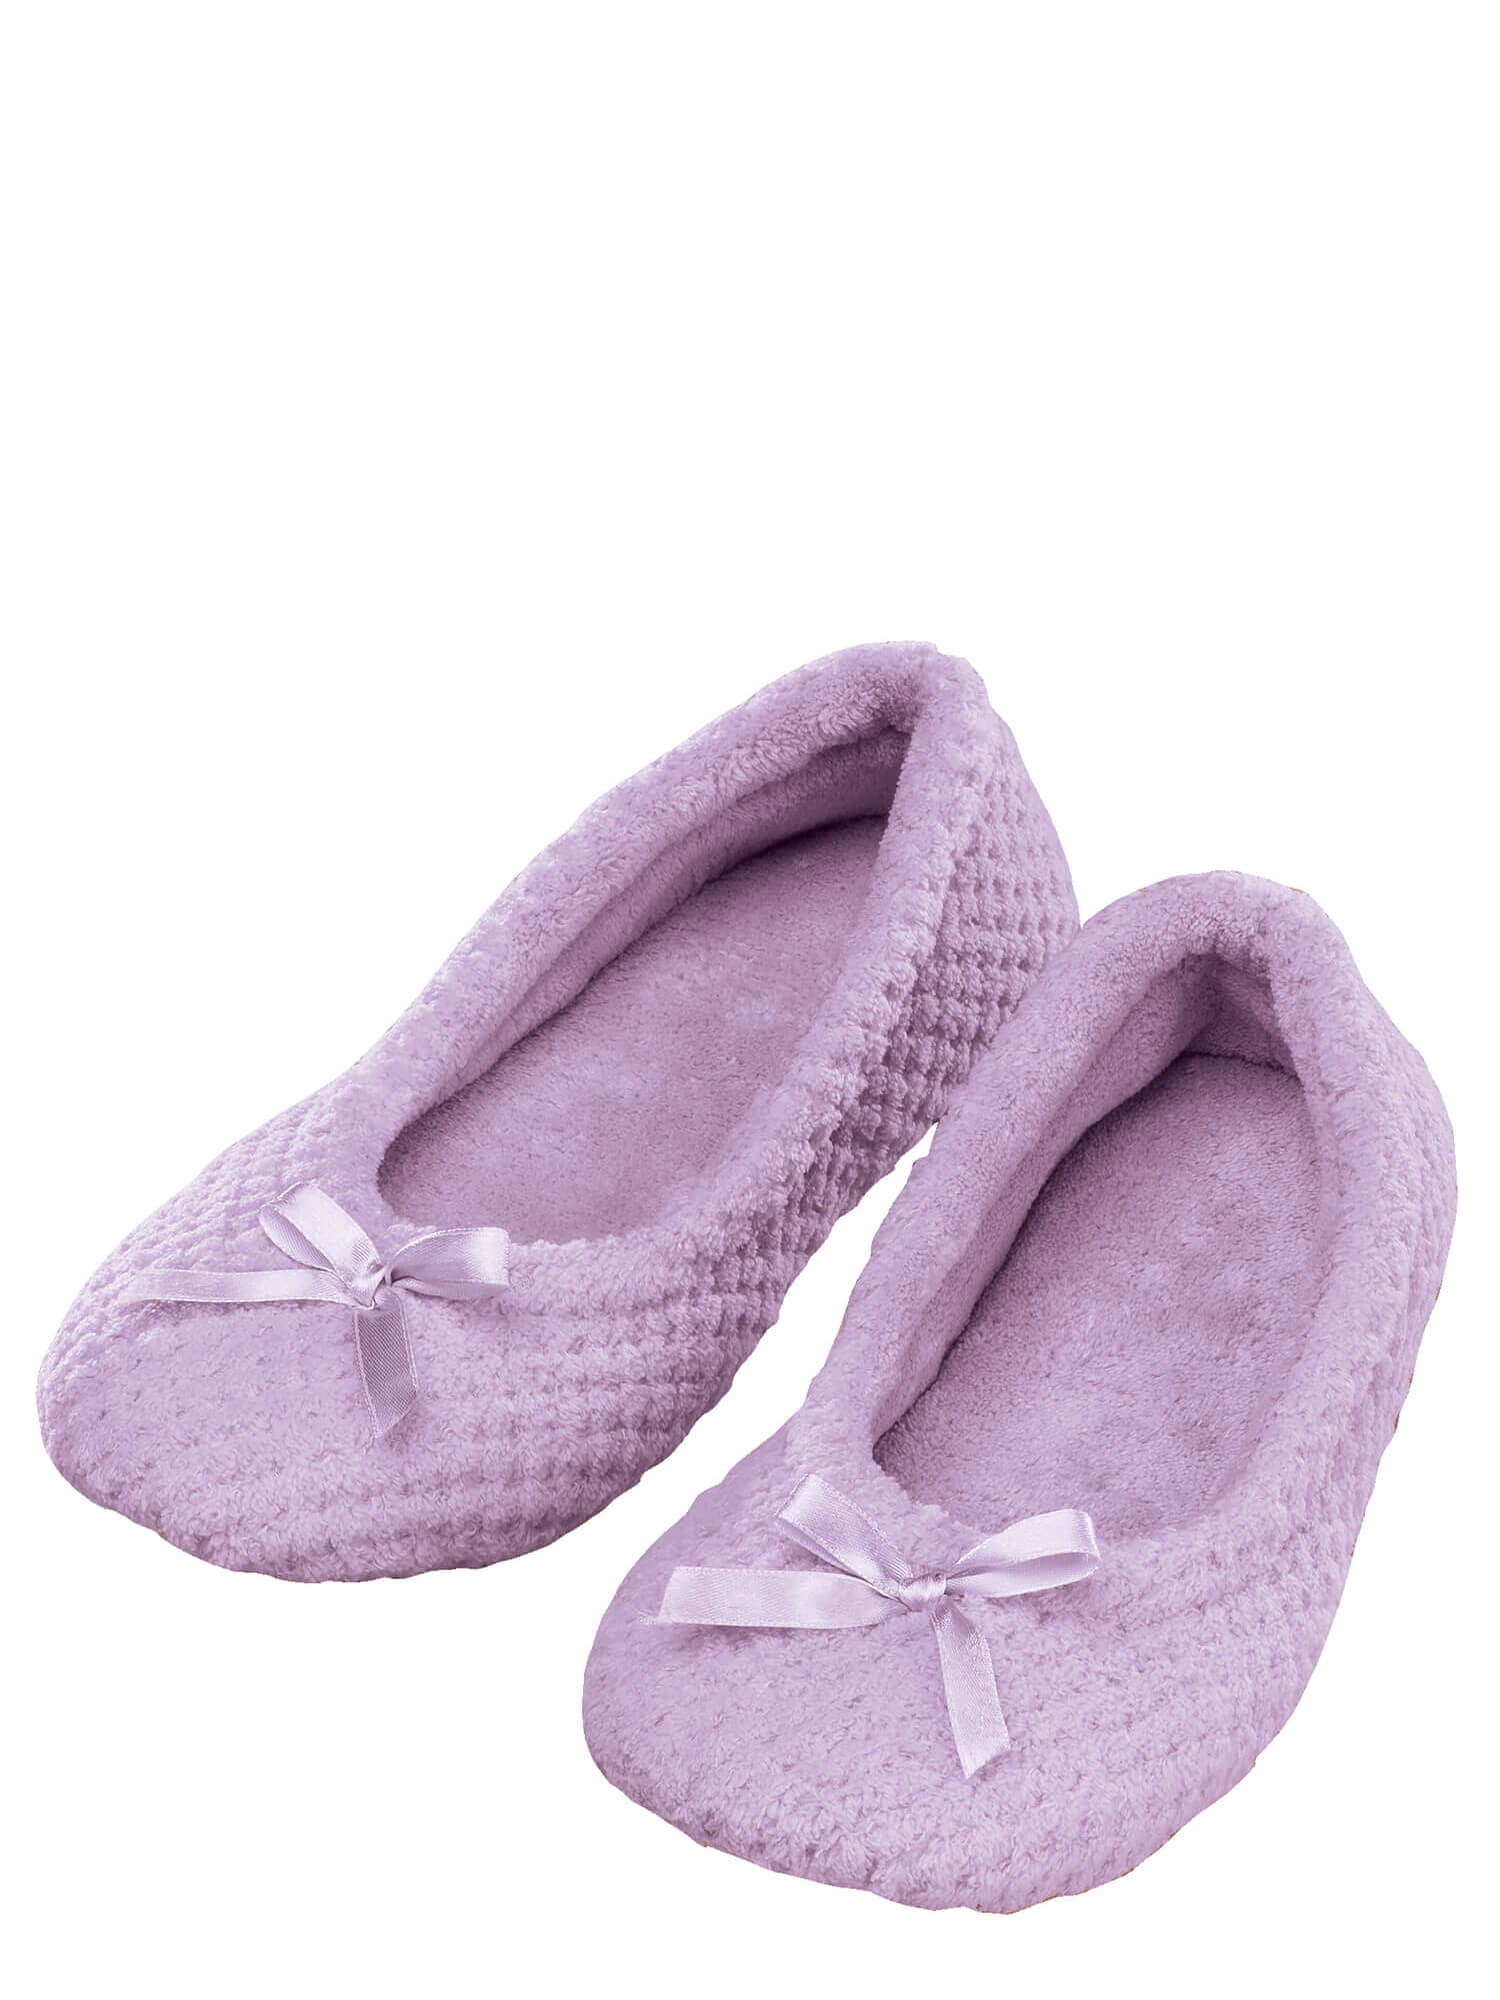 Chenille Ballet Slippers, Flexible House Slipper Design, Plush Insole, Non-Skid Outer - Size Medium, Light Purple - Walmart.com